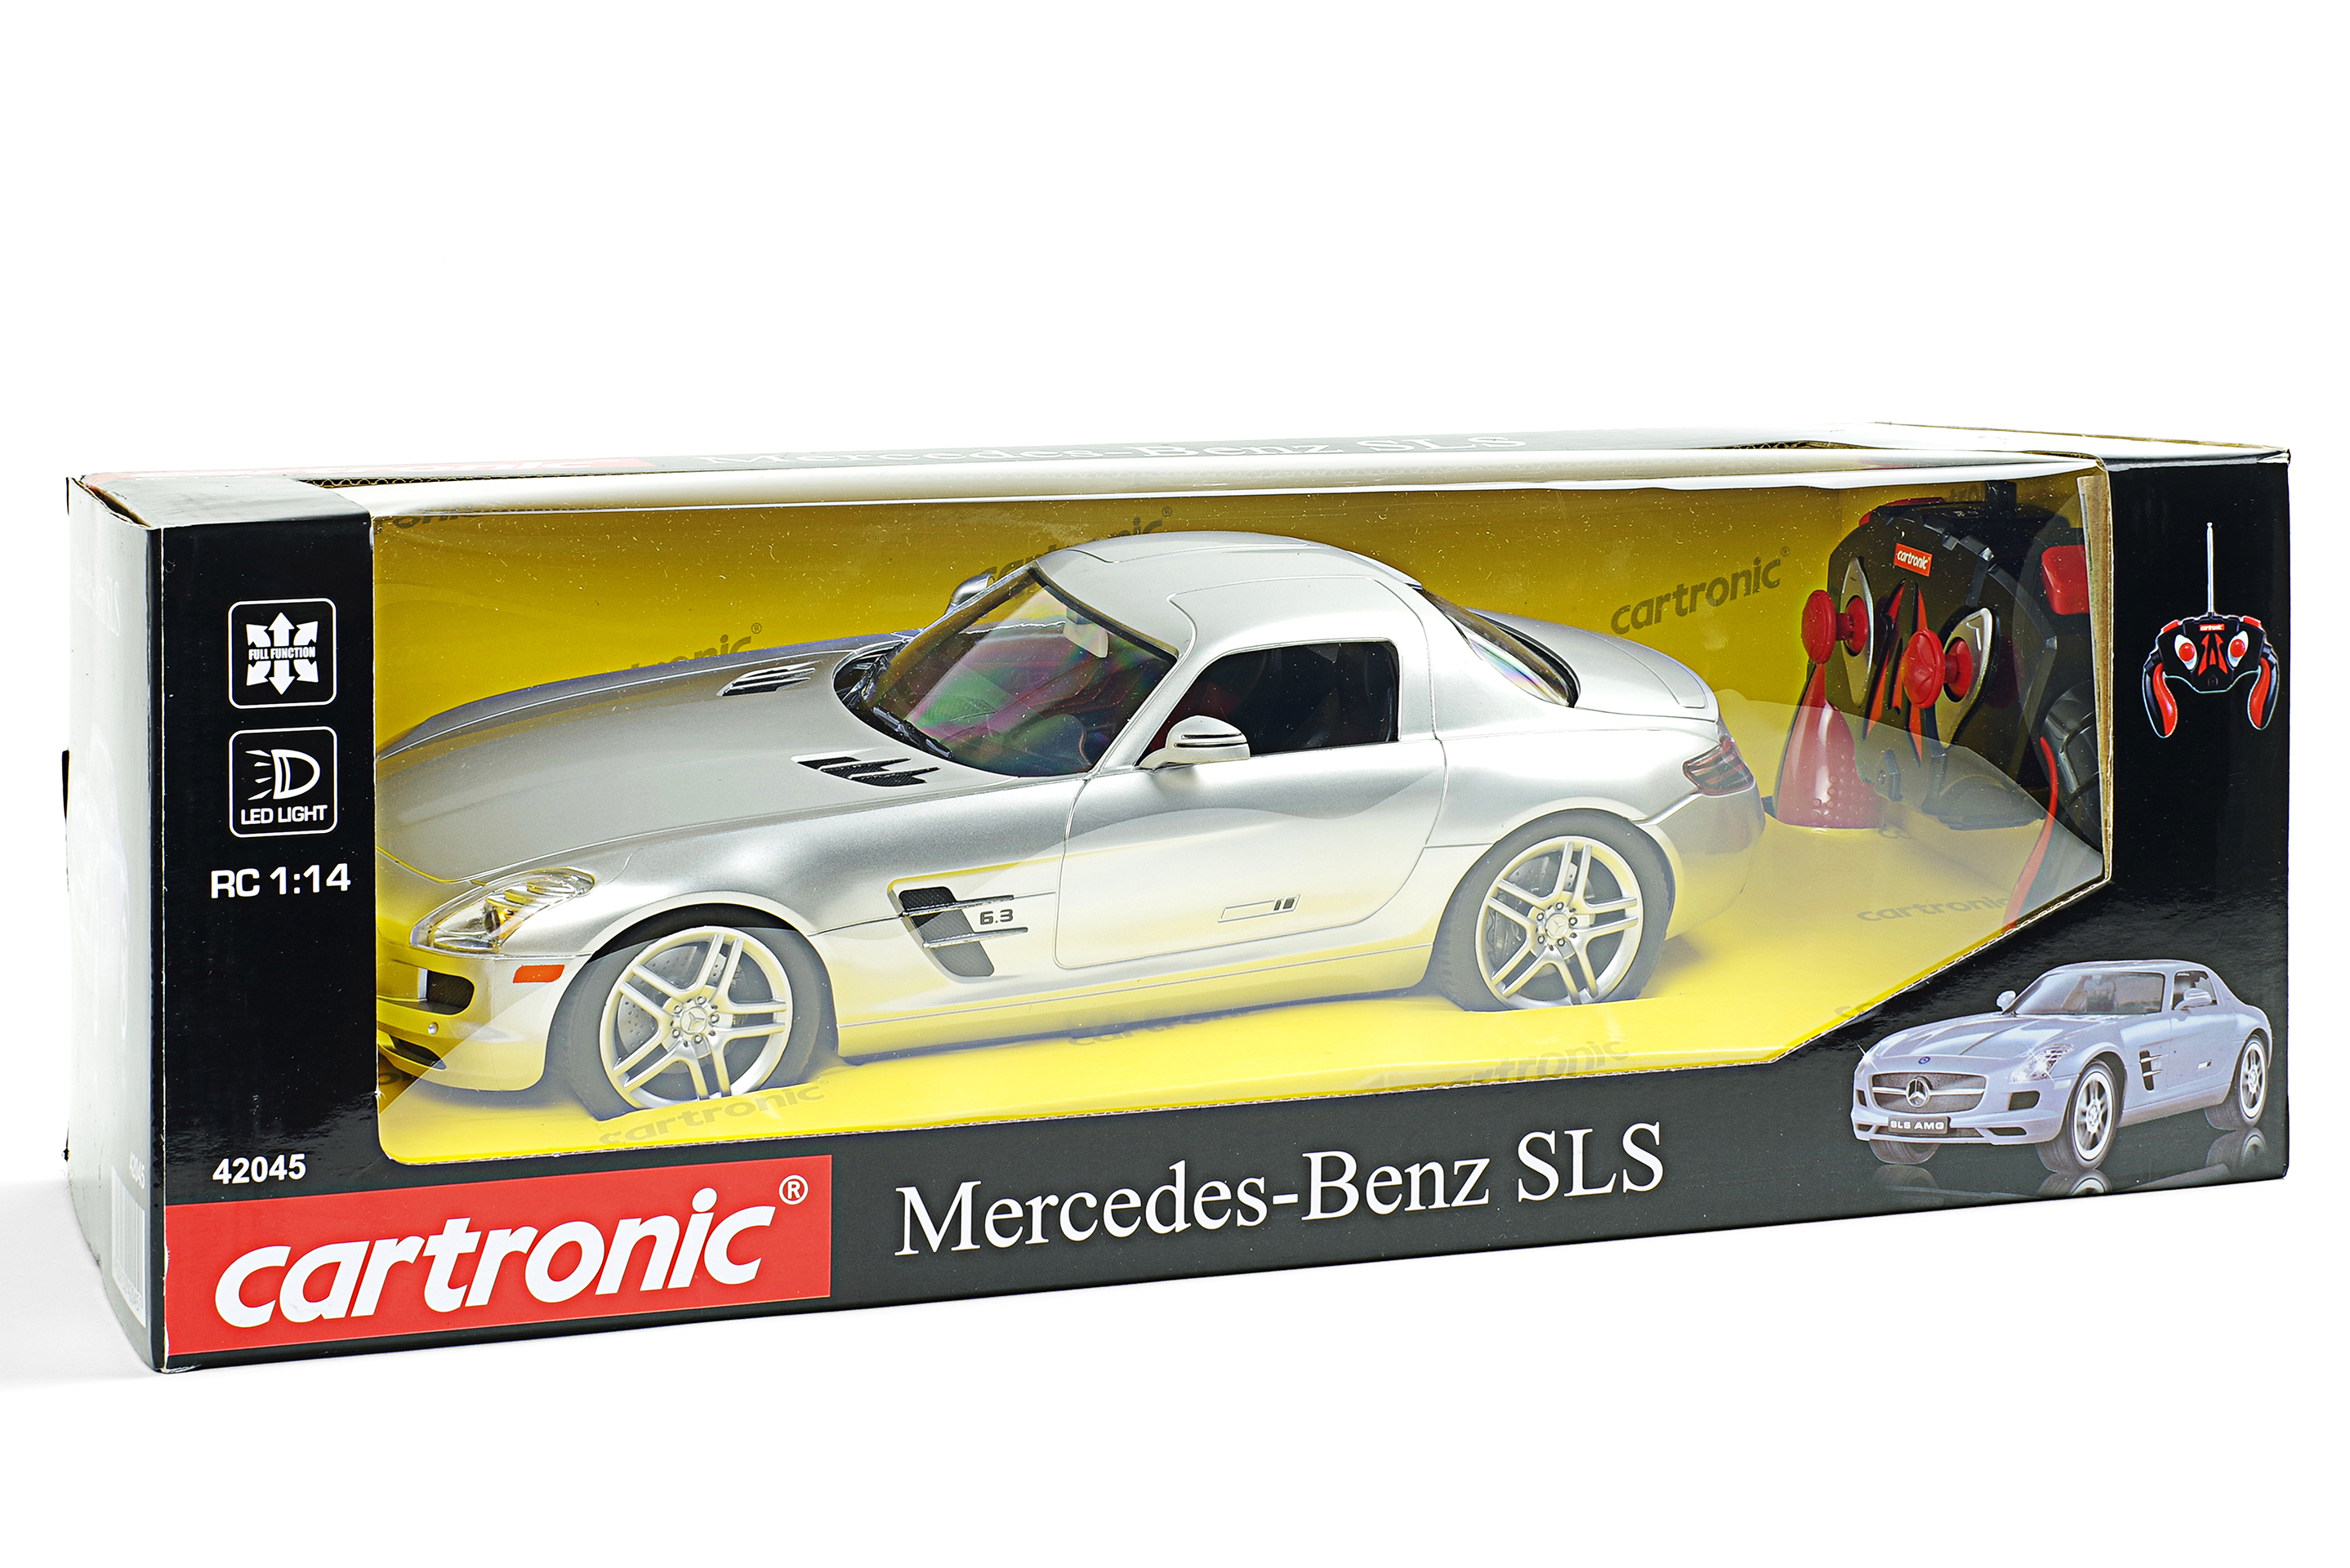 Mercedes-Benz SLS AMG Modellauto RC Modellfahrzeug 1:14 27MHZ Kinder Auto 